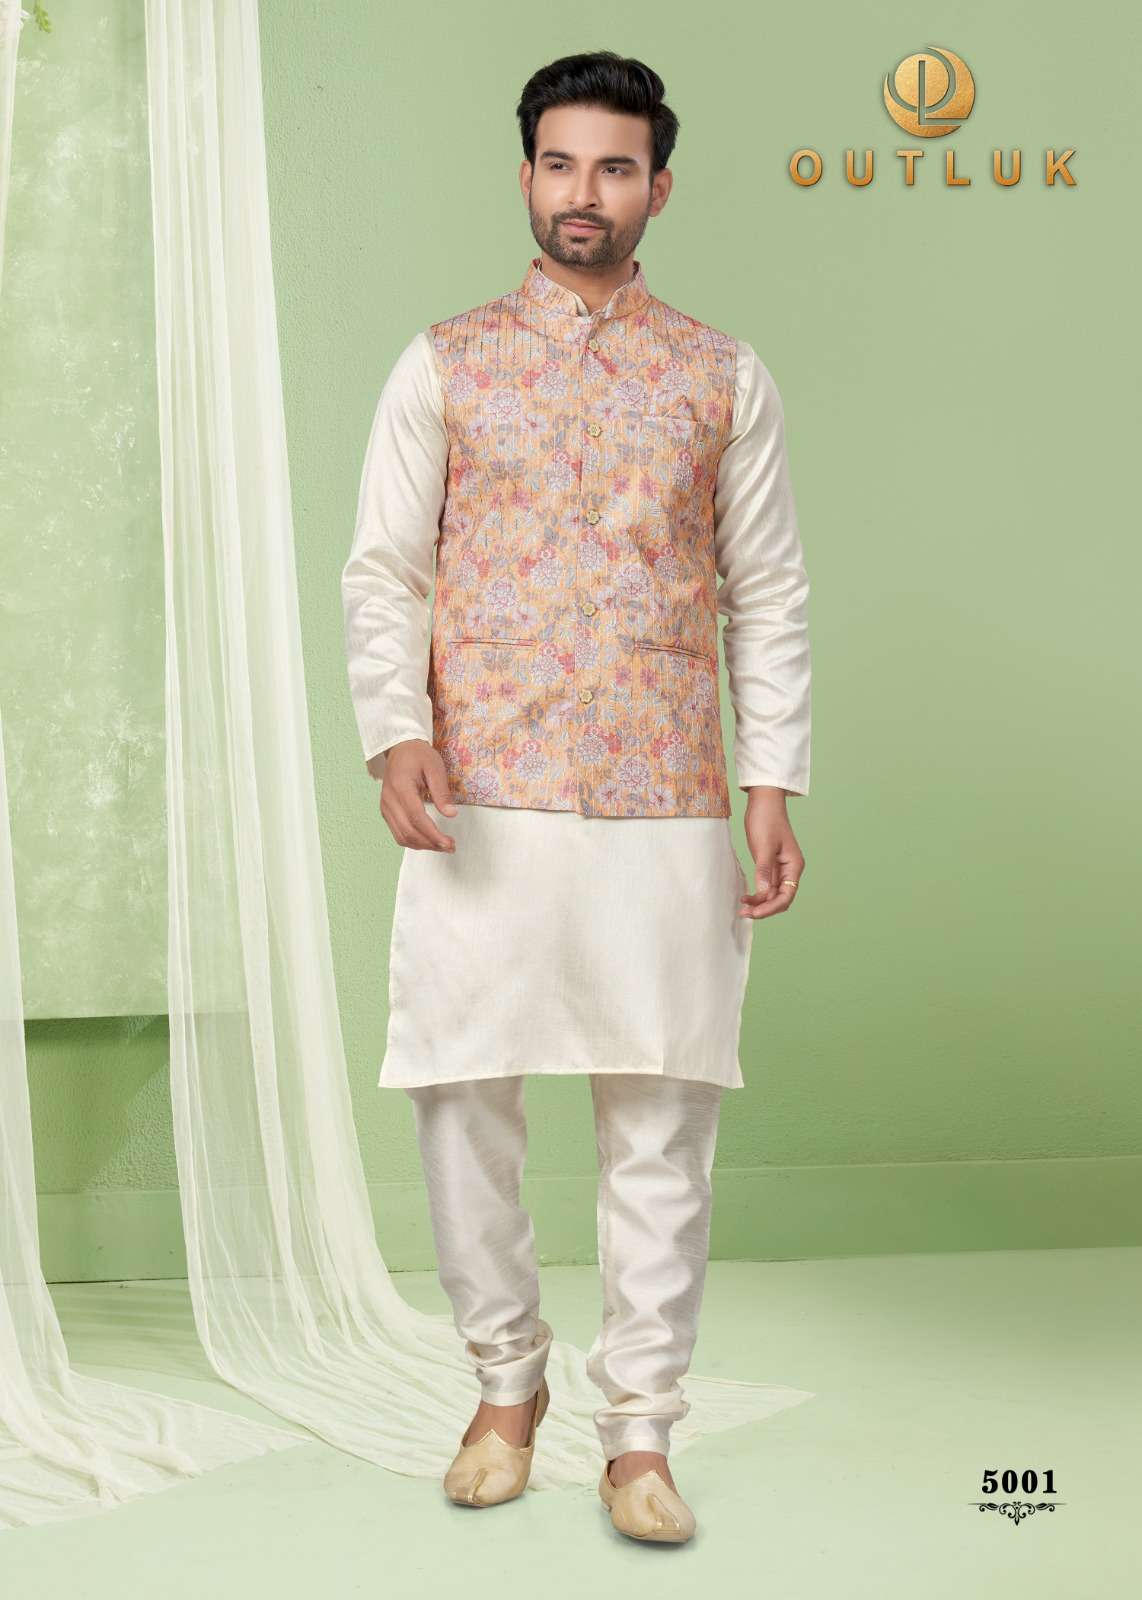 mens wear kurta pyjama outluk added wedding collection series new designs in modi jacket kurta pajama catalogue name outluk wedding collection vol 5 